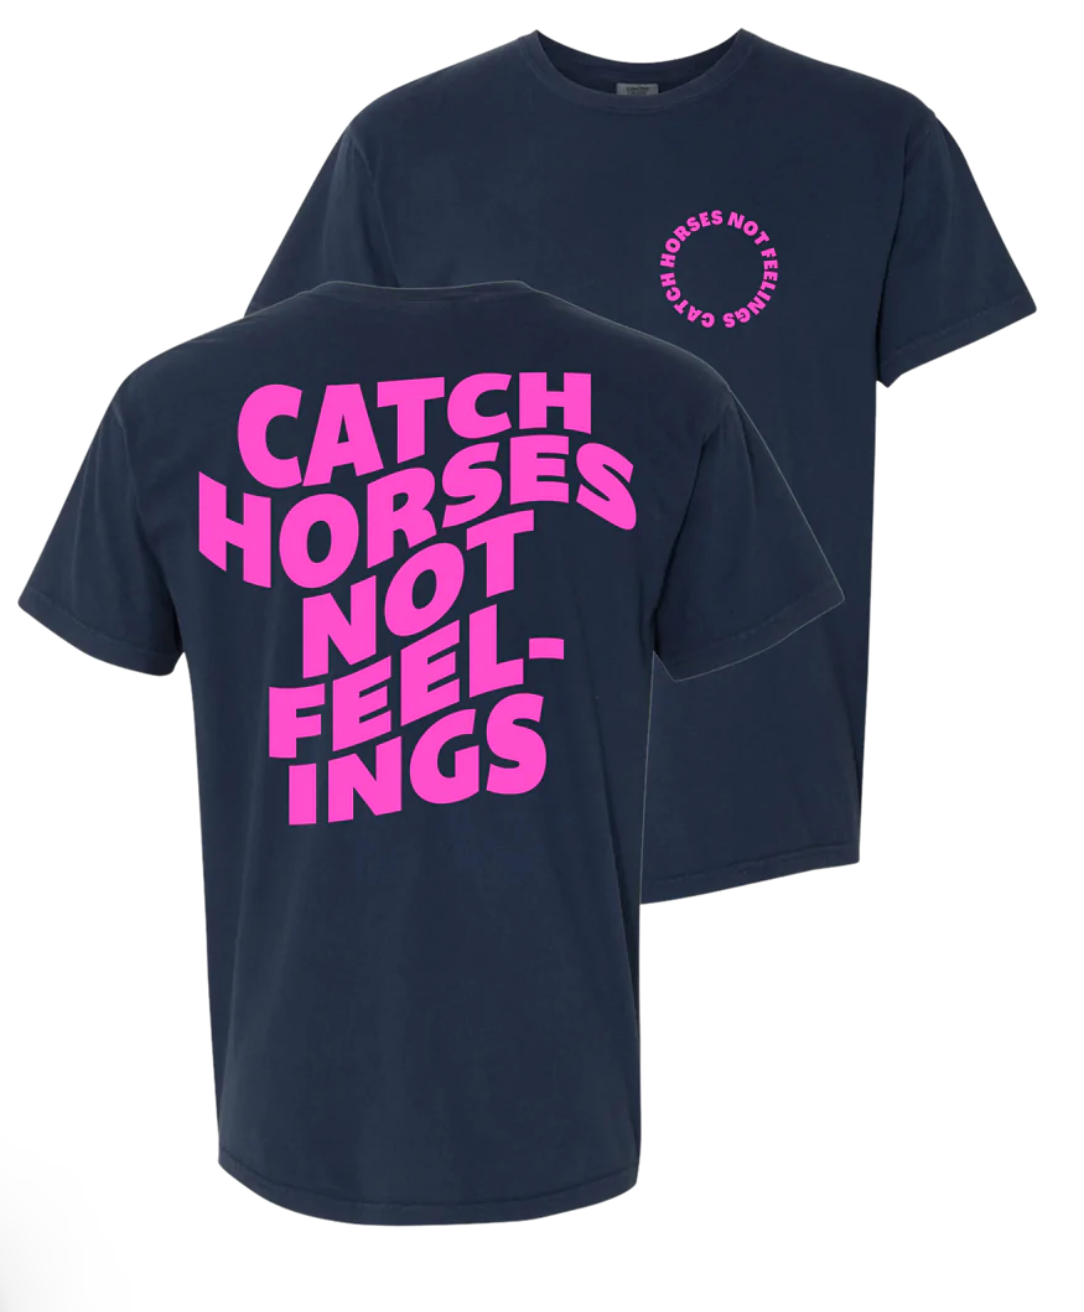 Ranch Dress'n Catch Horses - Navy Tee